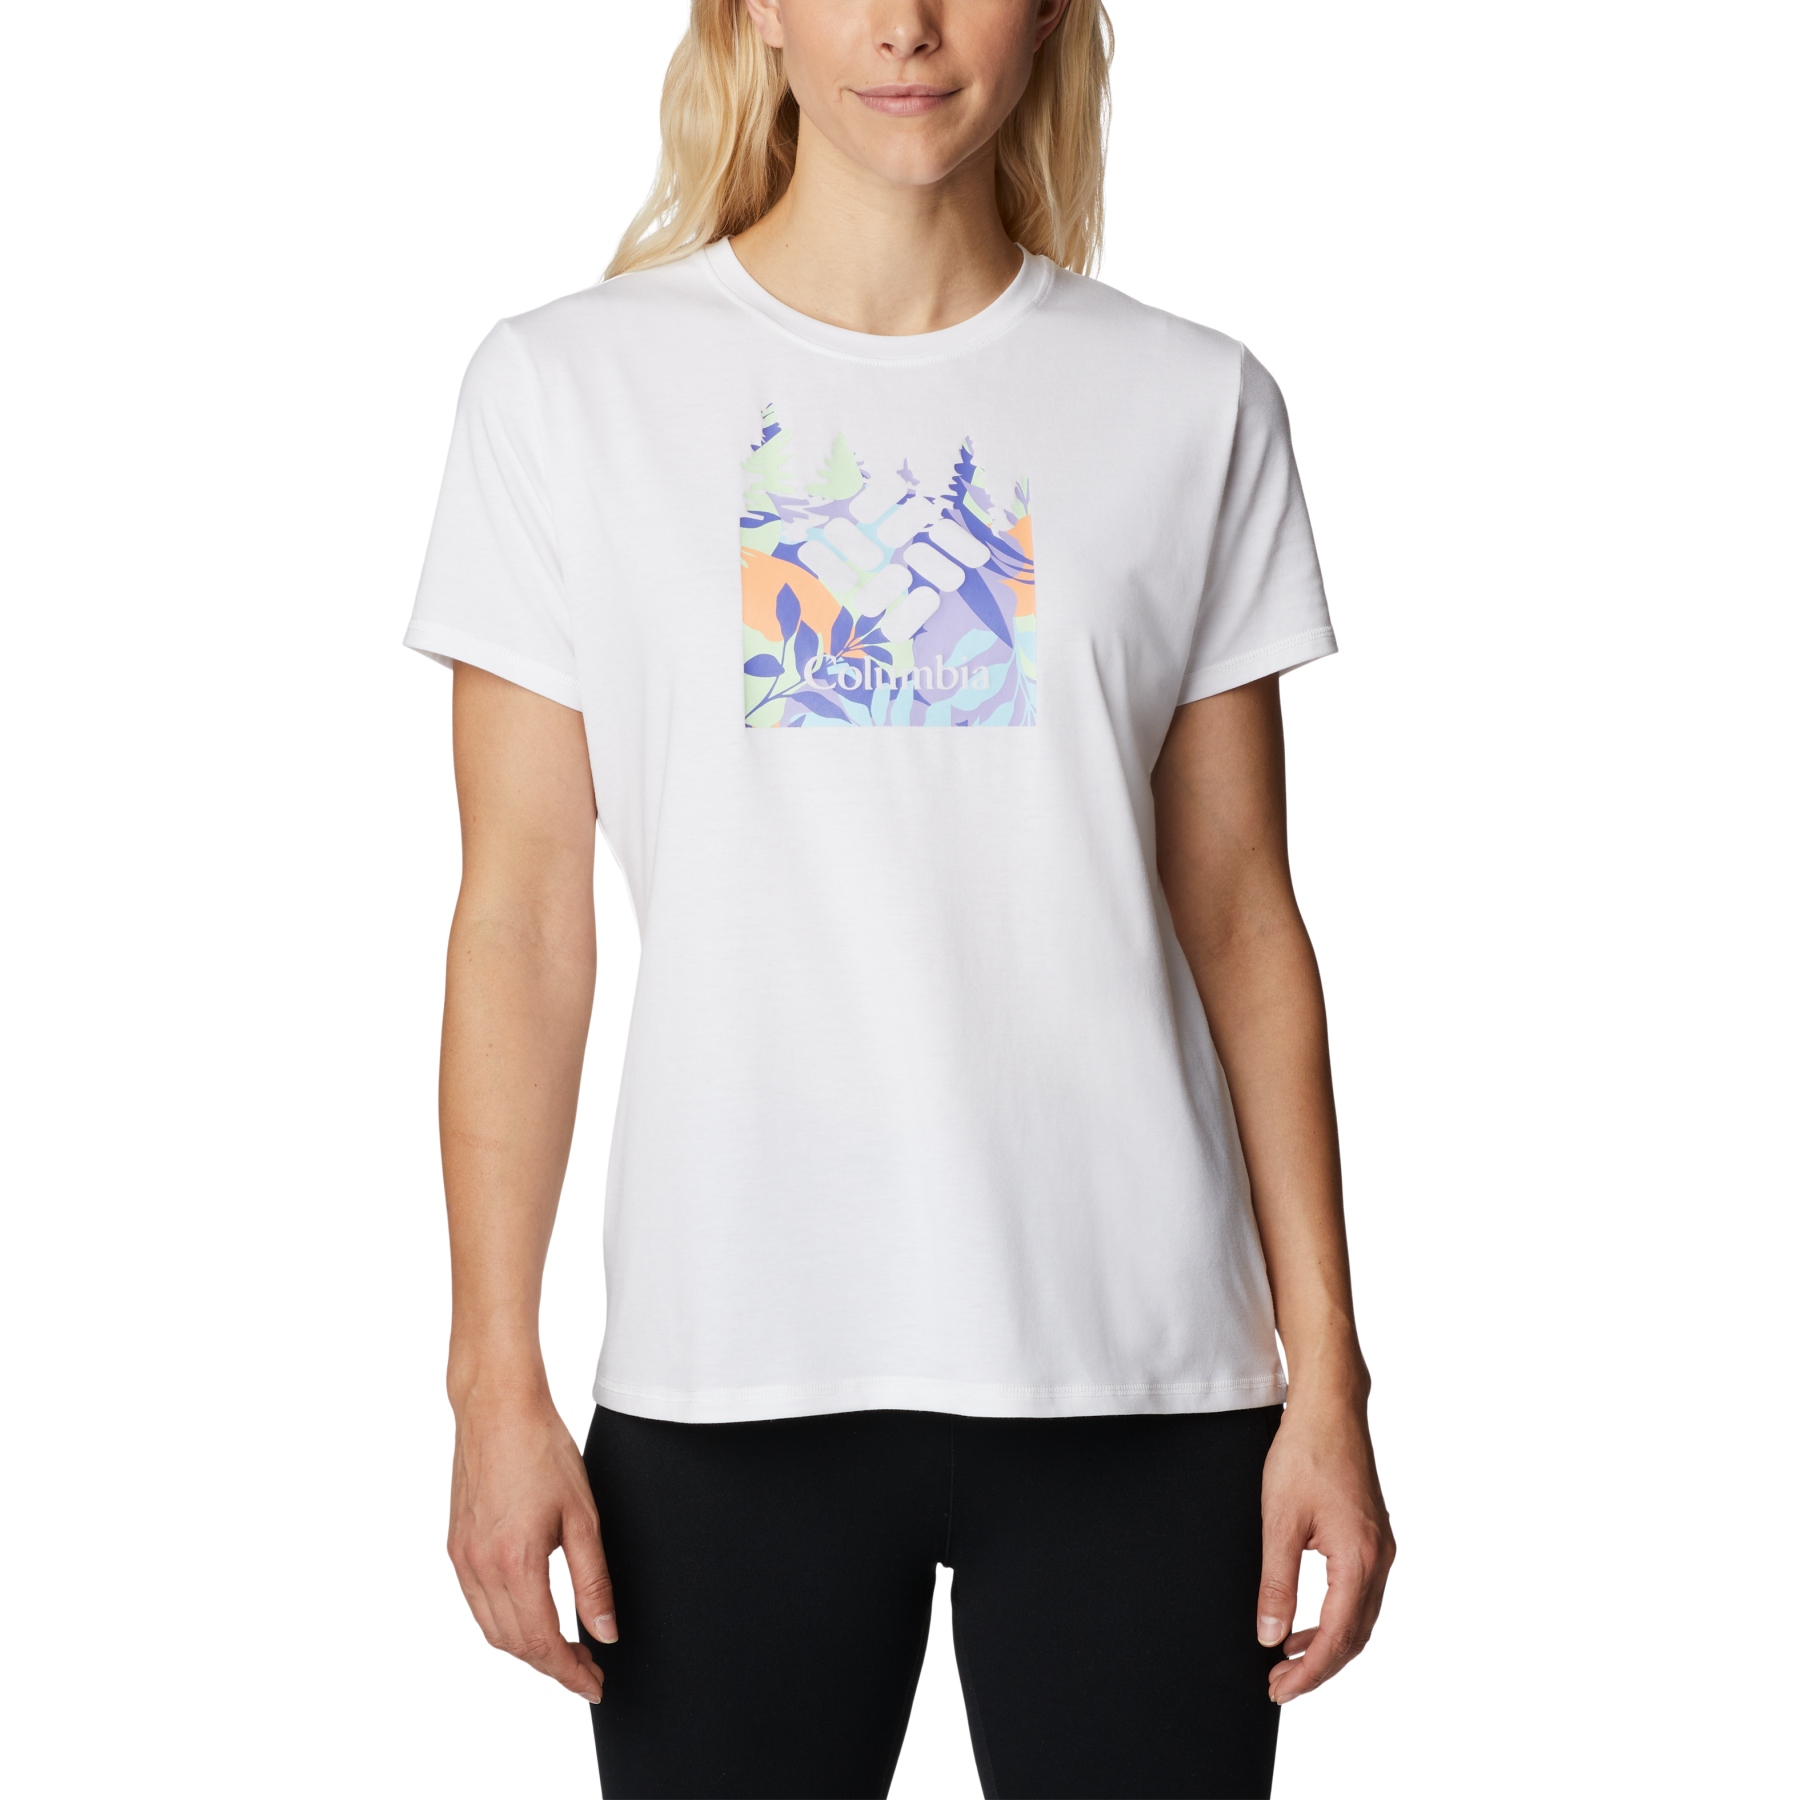 Productfoto van Columbia Sun Trek Graphic T-Shirt Dames - White/Arboreal Swirl Graphic